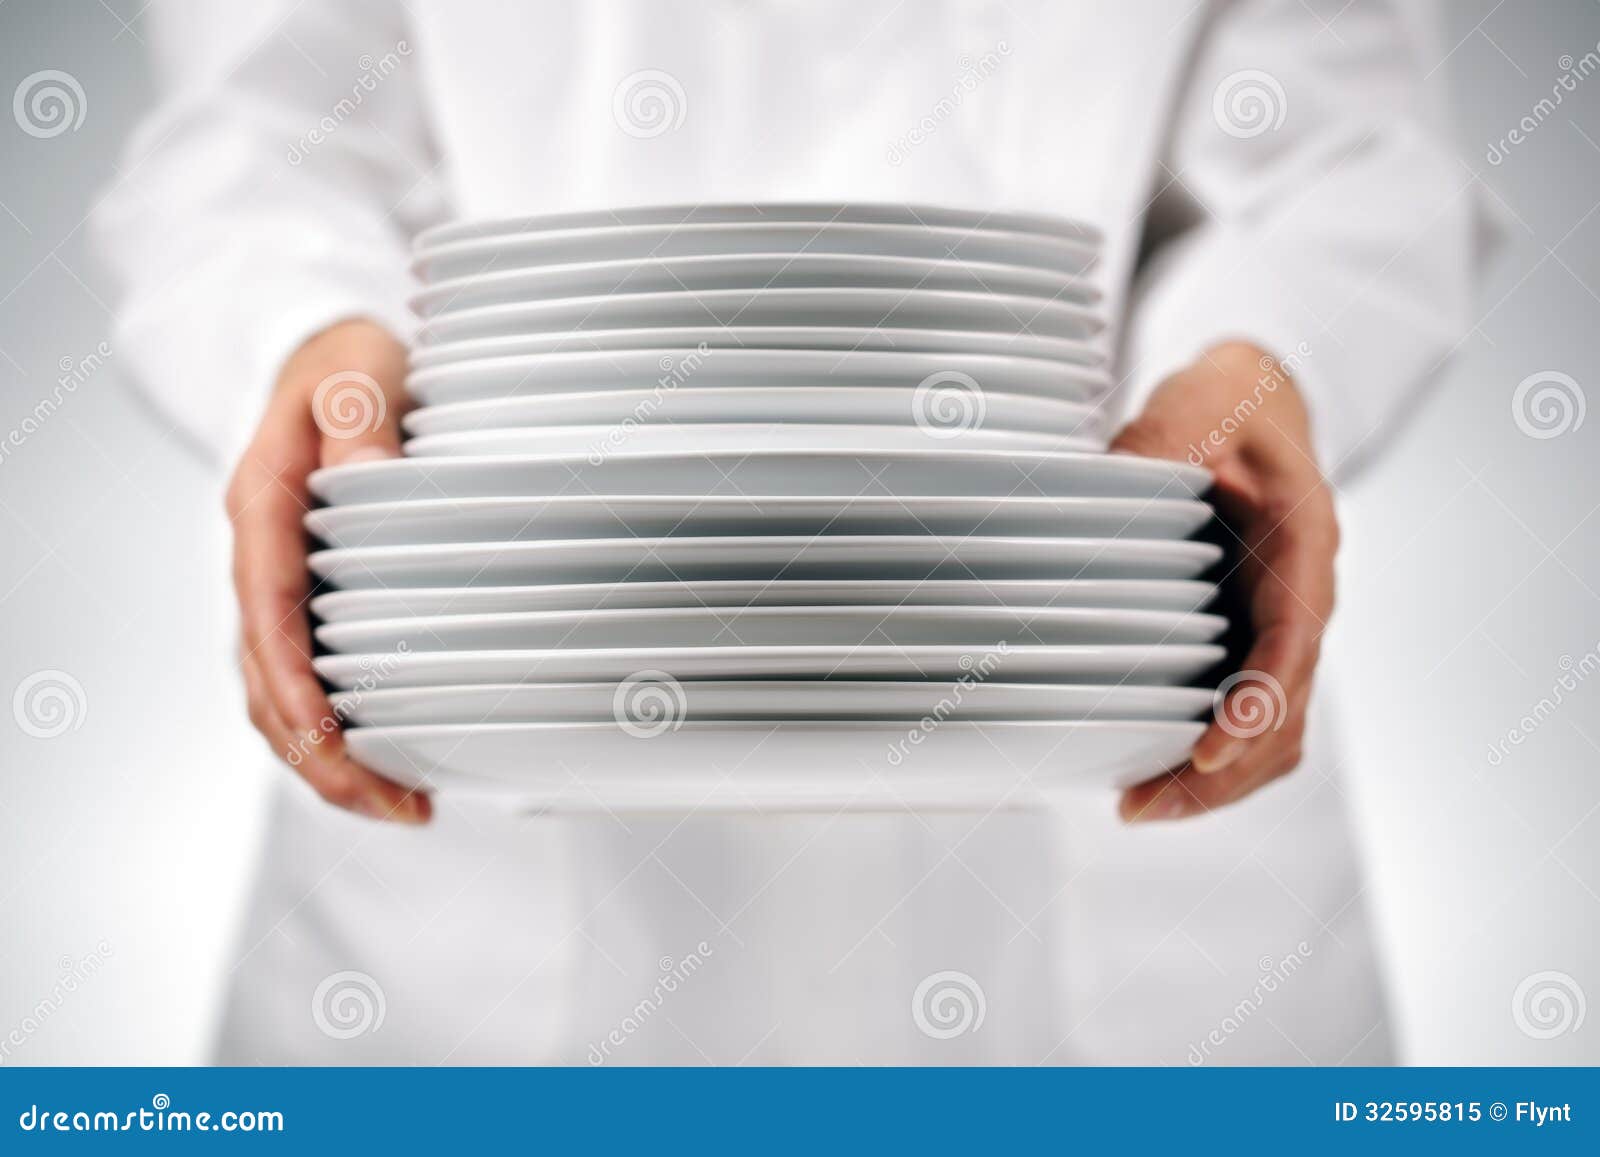 holding plates